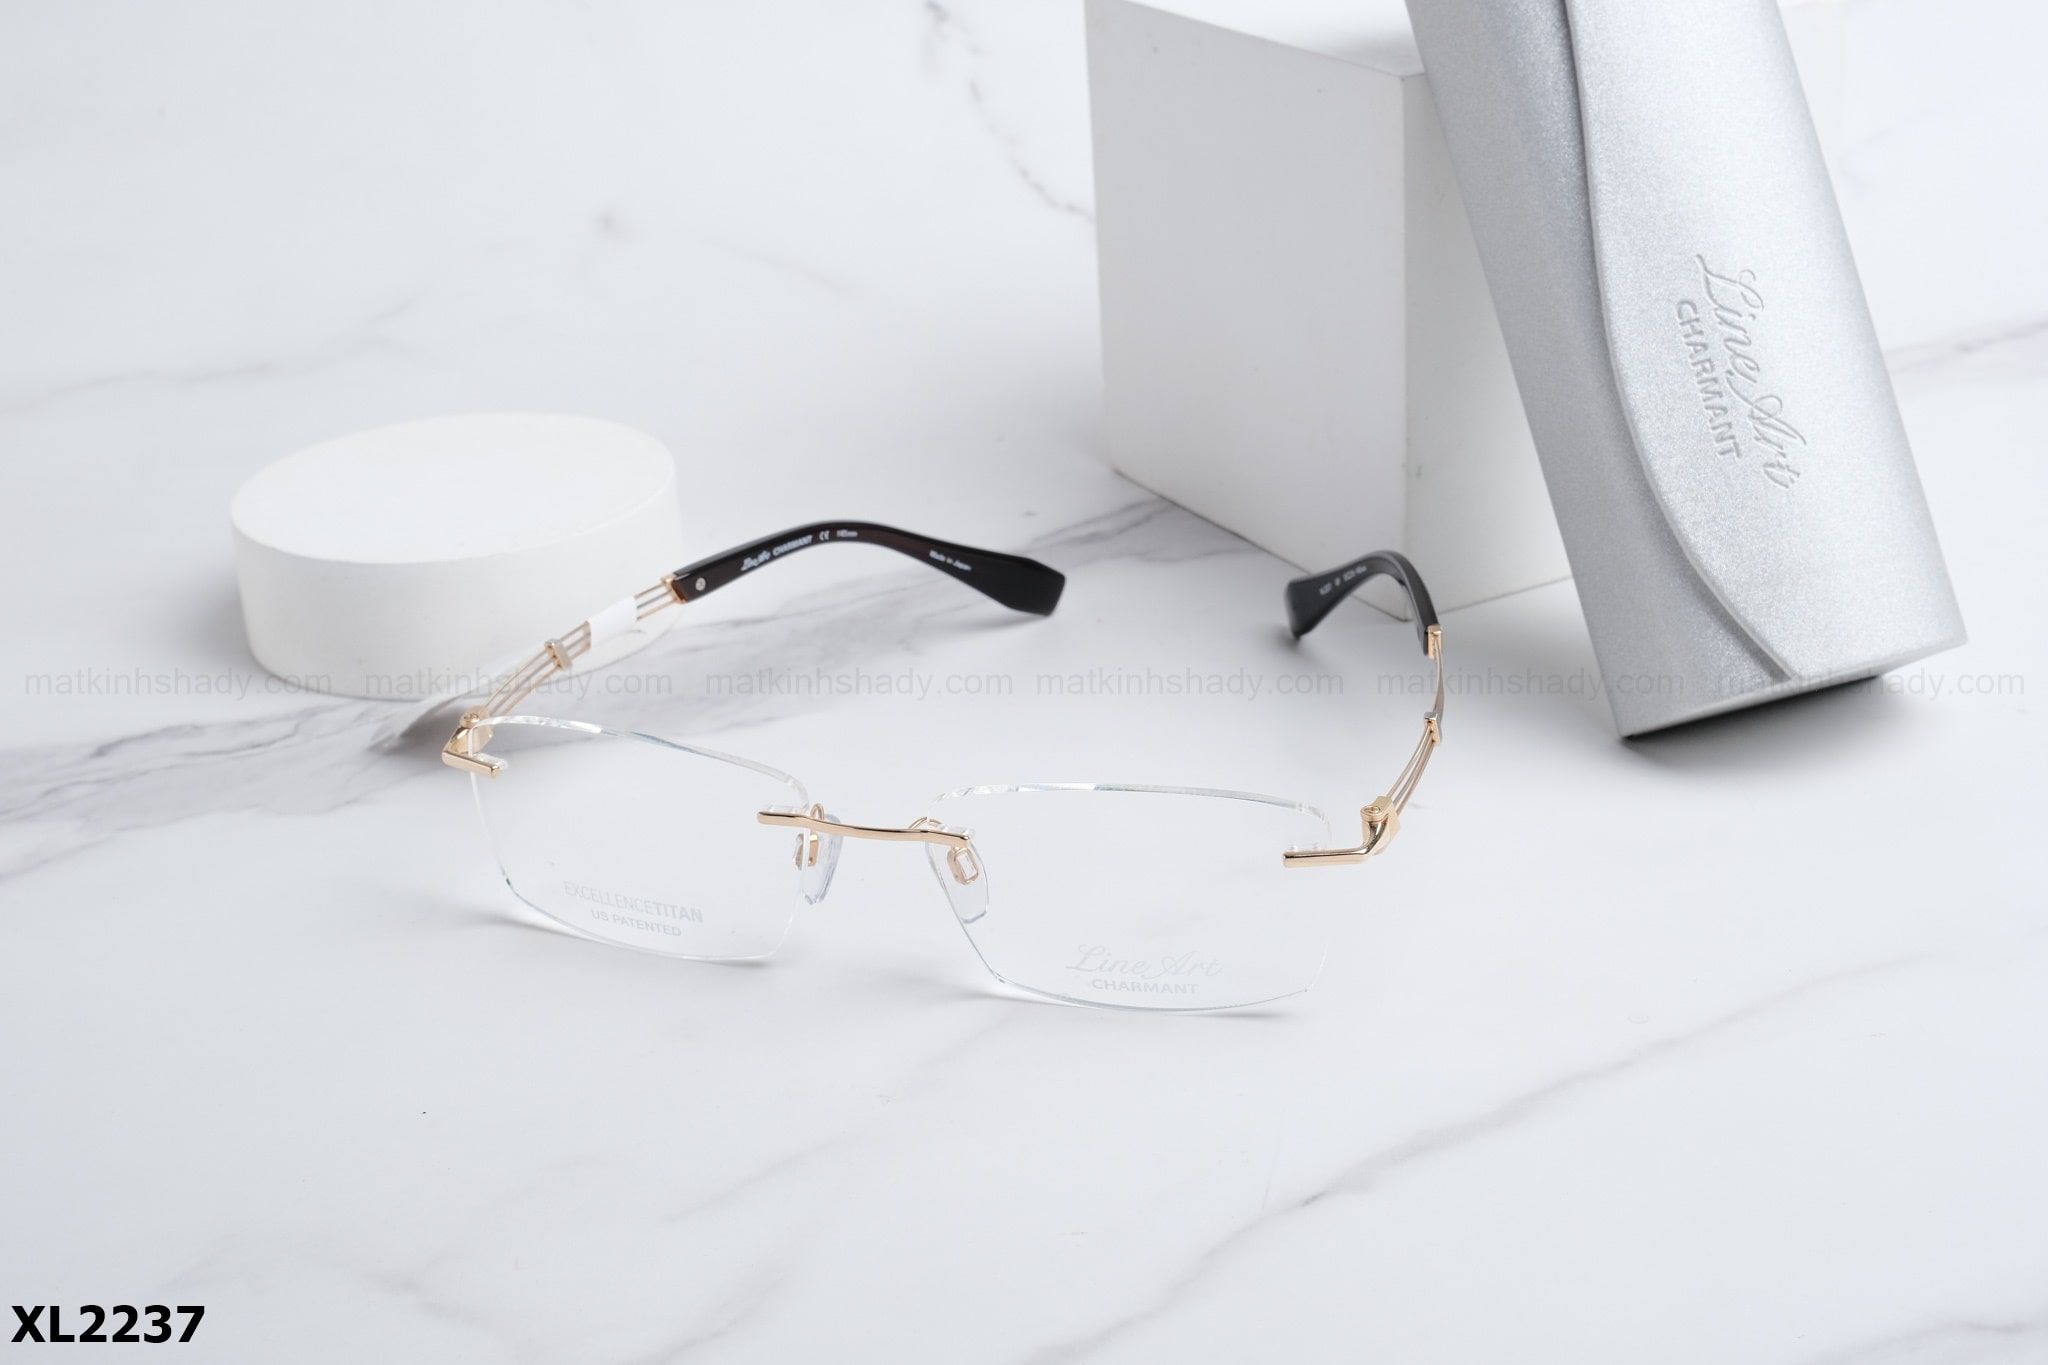  LINE ART CHARMANT Eyewear - Glasses - XL2237 